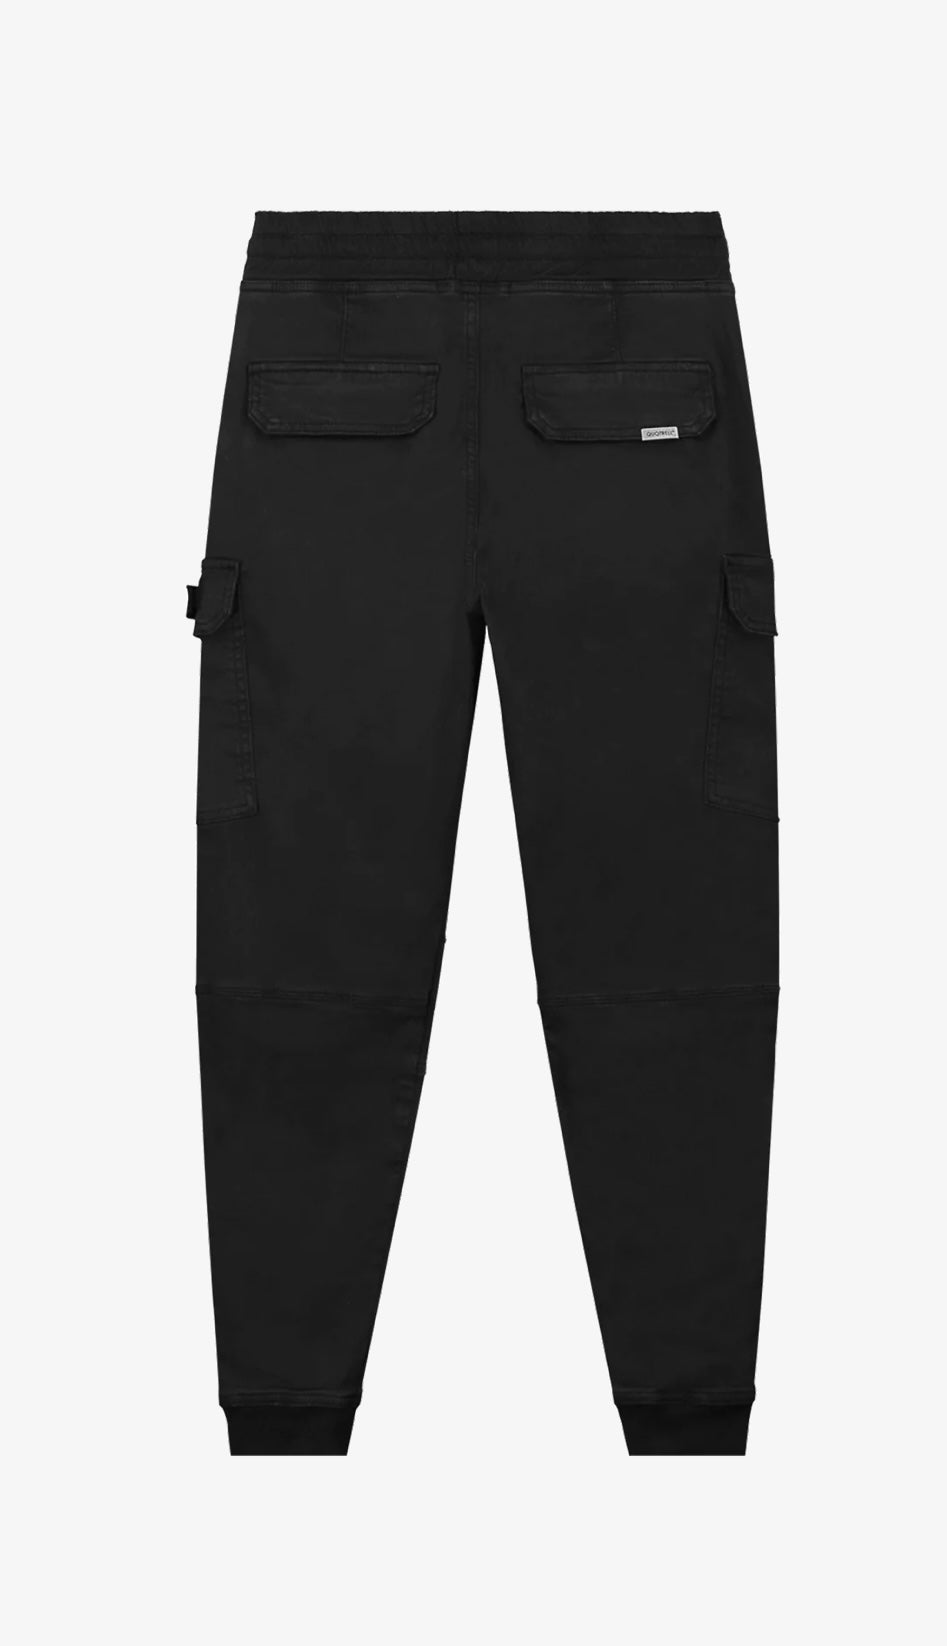 Quotrell casablanca cargo pants - black/white